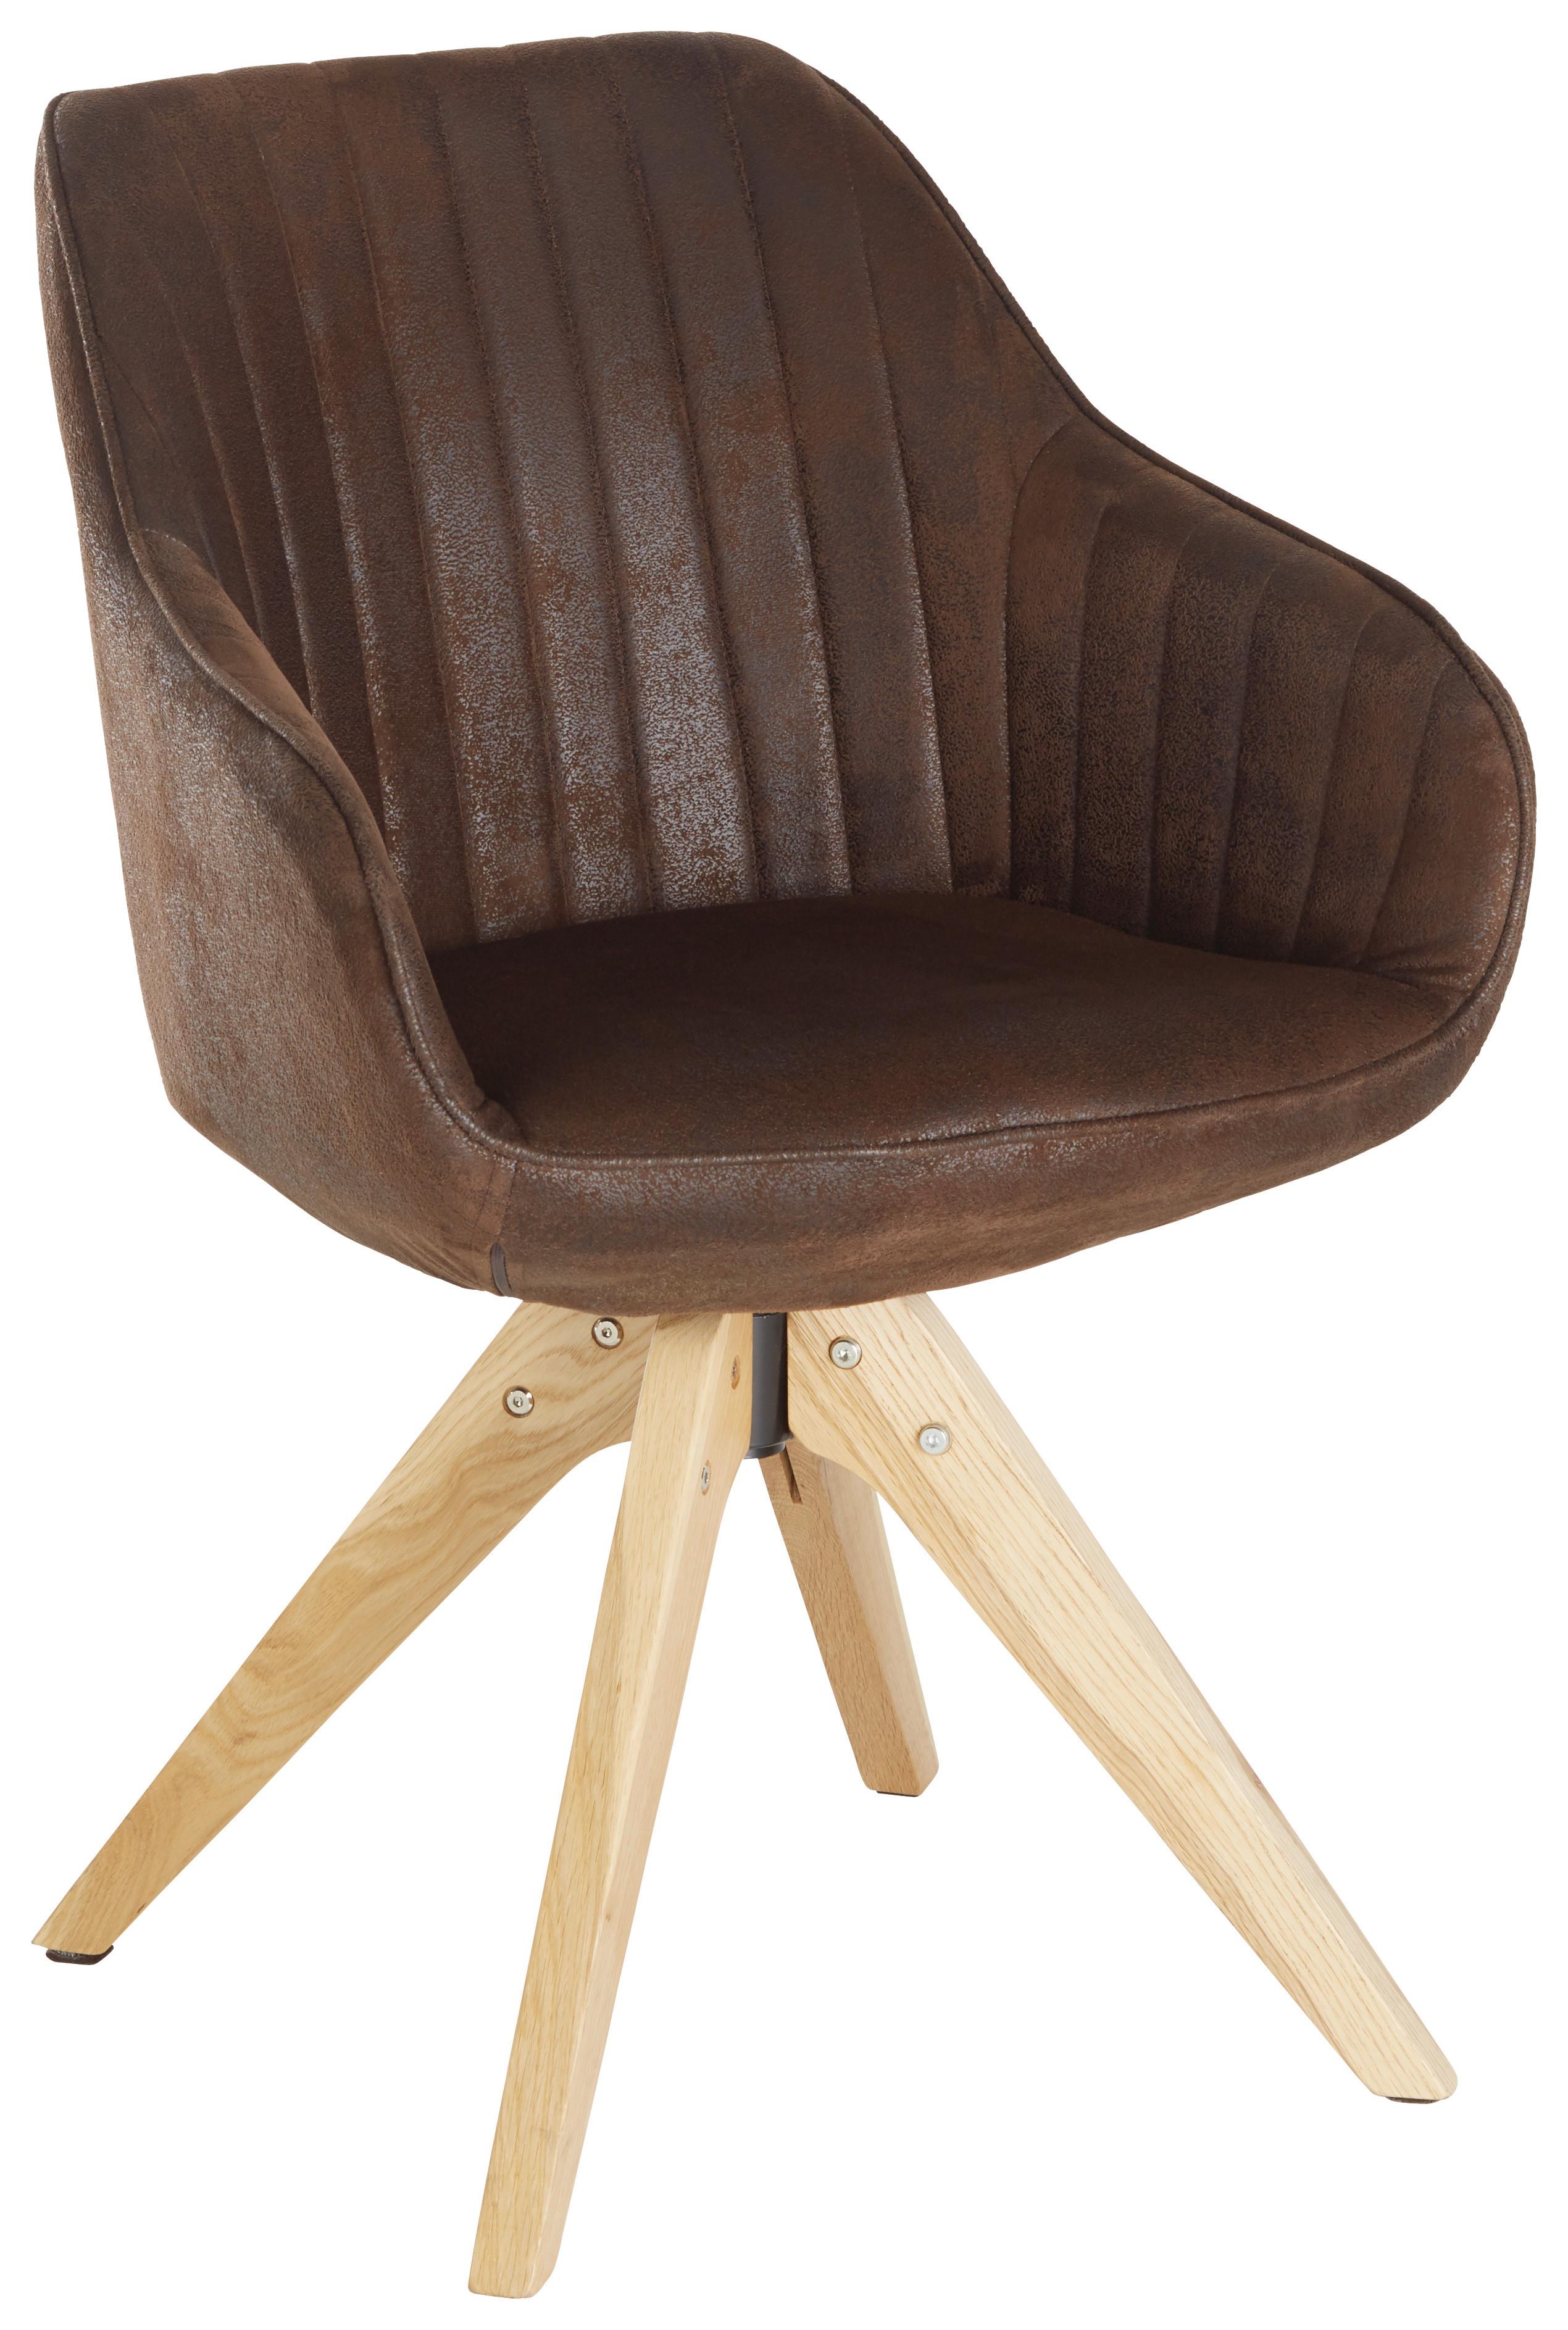 Stolica S Naslonom Za Ruke Chill - tamno smeđa/boje hrasta, drvo/tekstil (60/83/65cm) - Premium Living